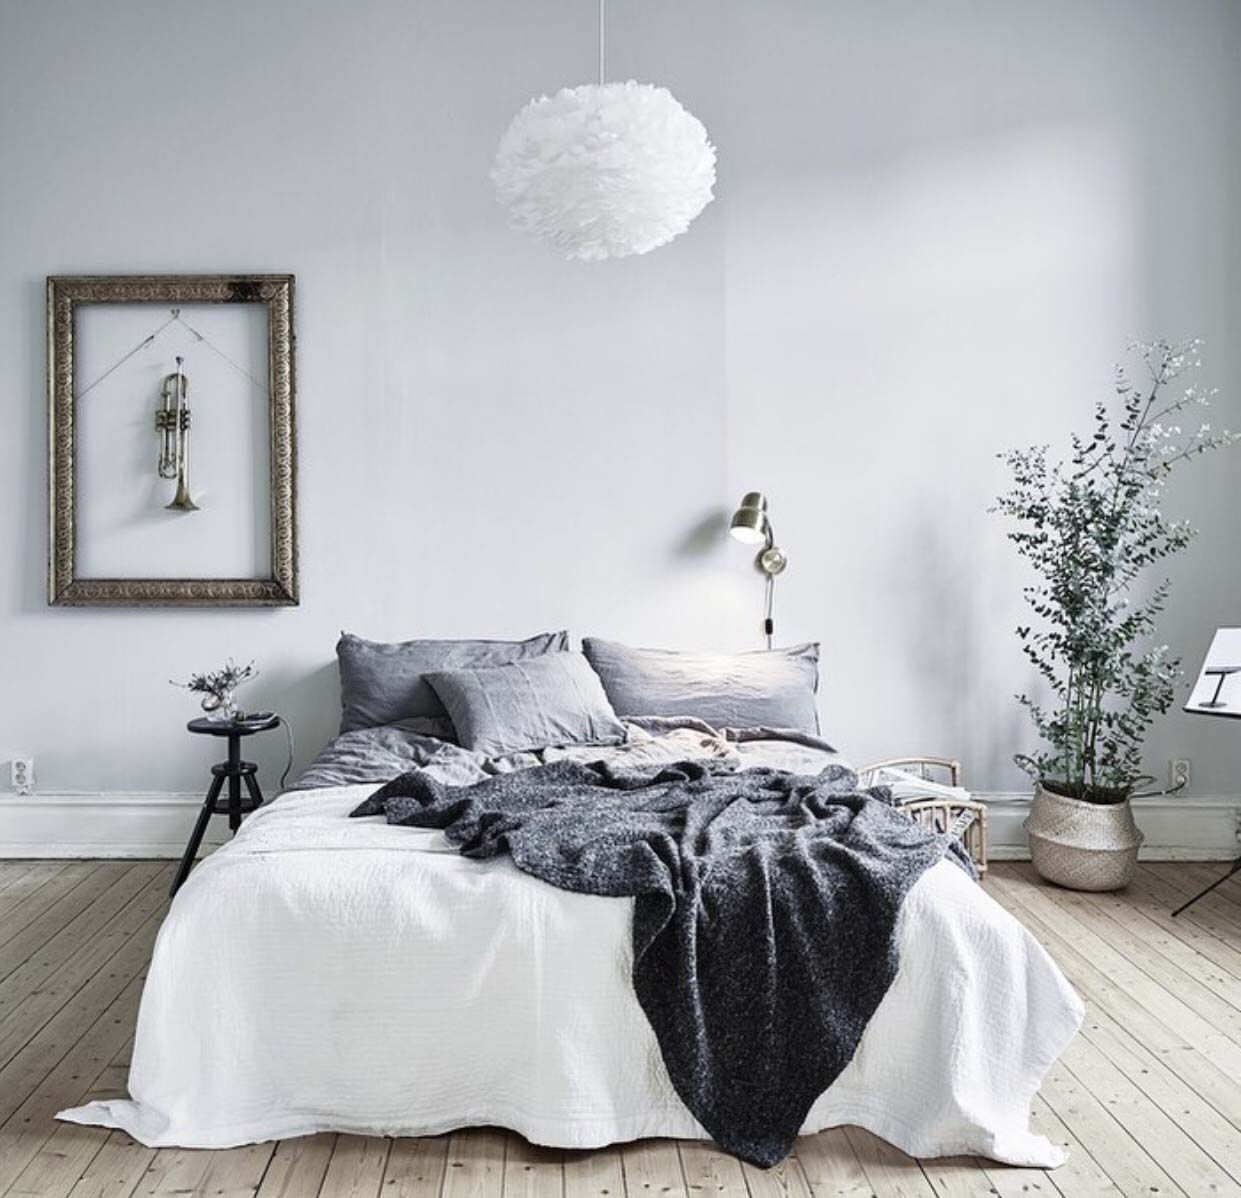 Cozy bedroom winter decorating decor room onekindesign interior cabin warmth designs via instagram inspiration living trendy